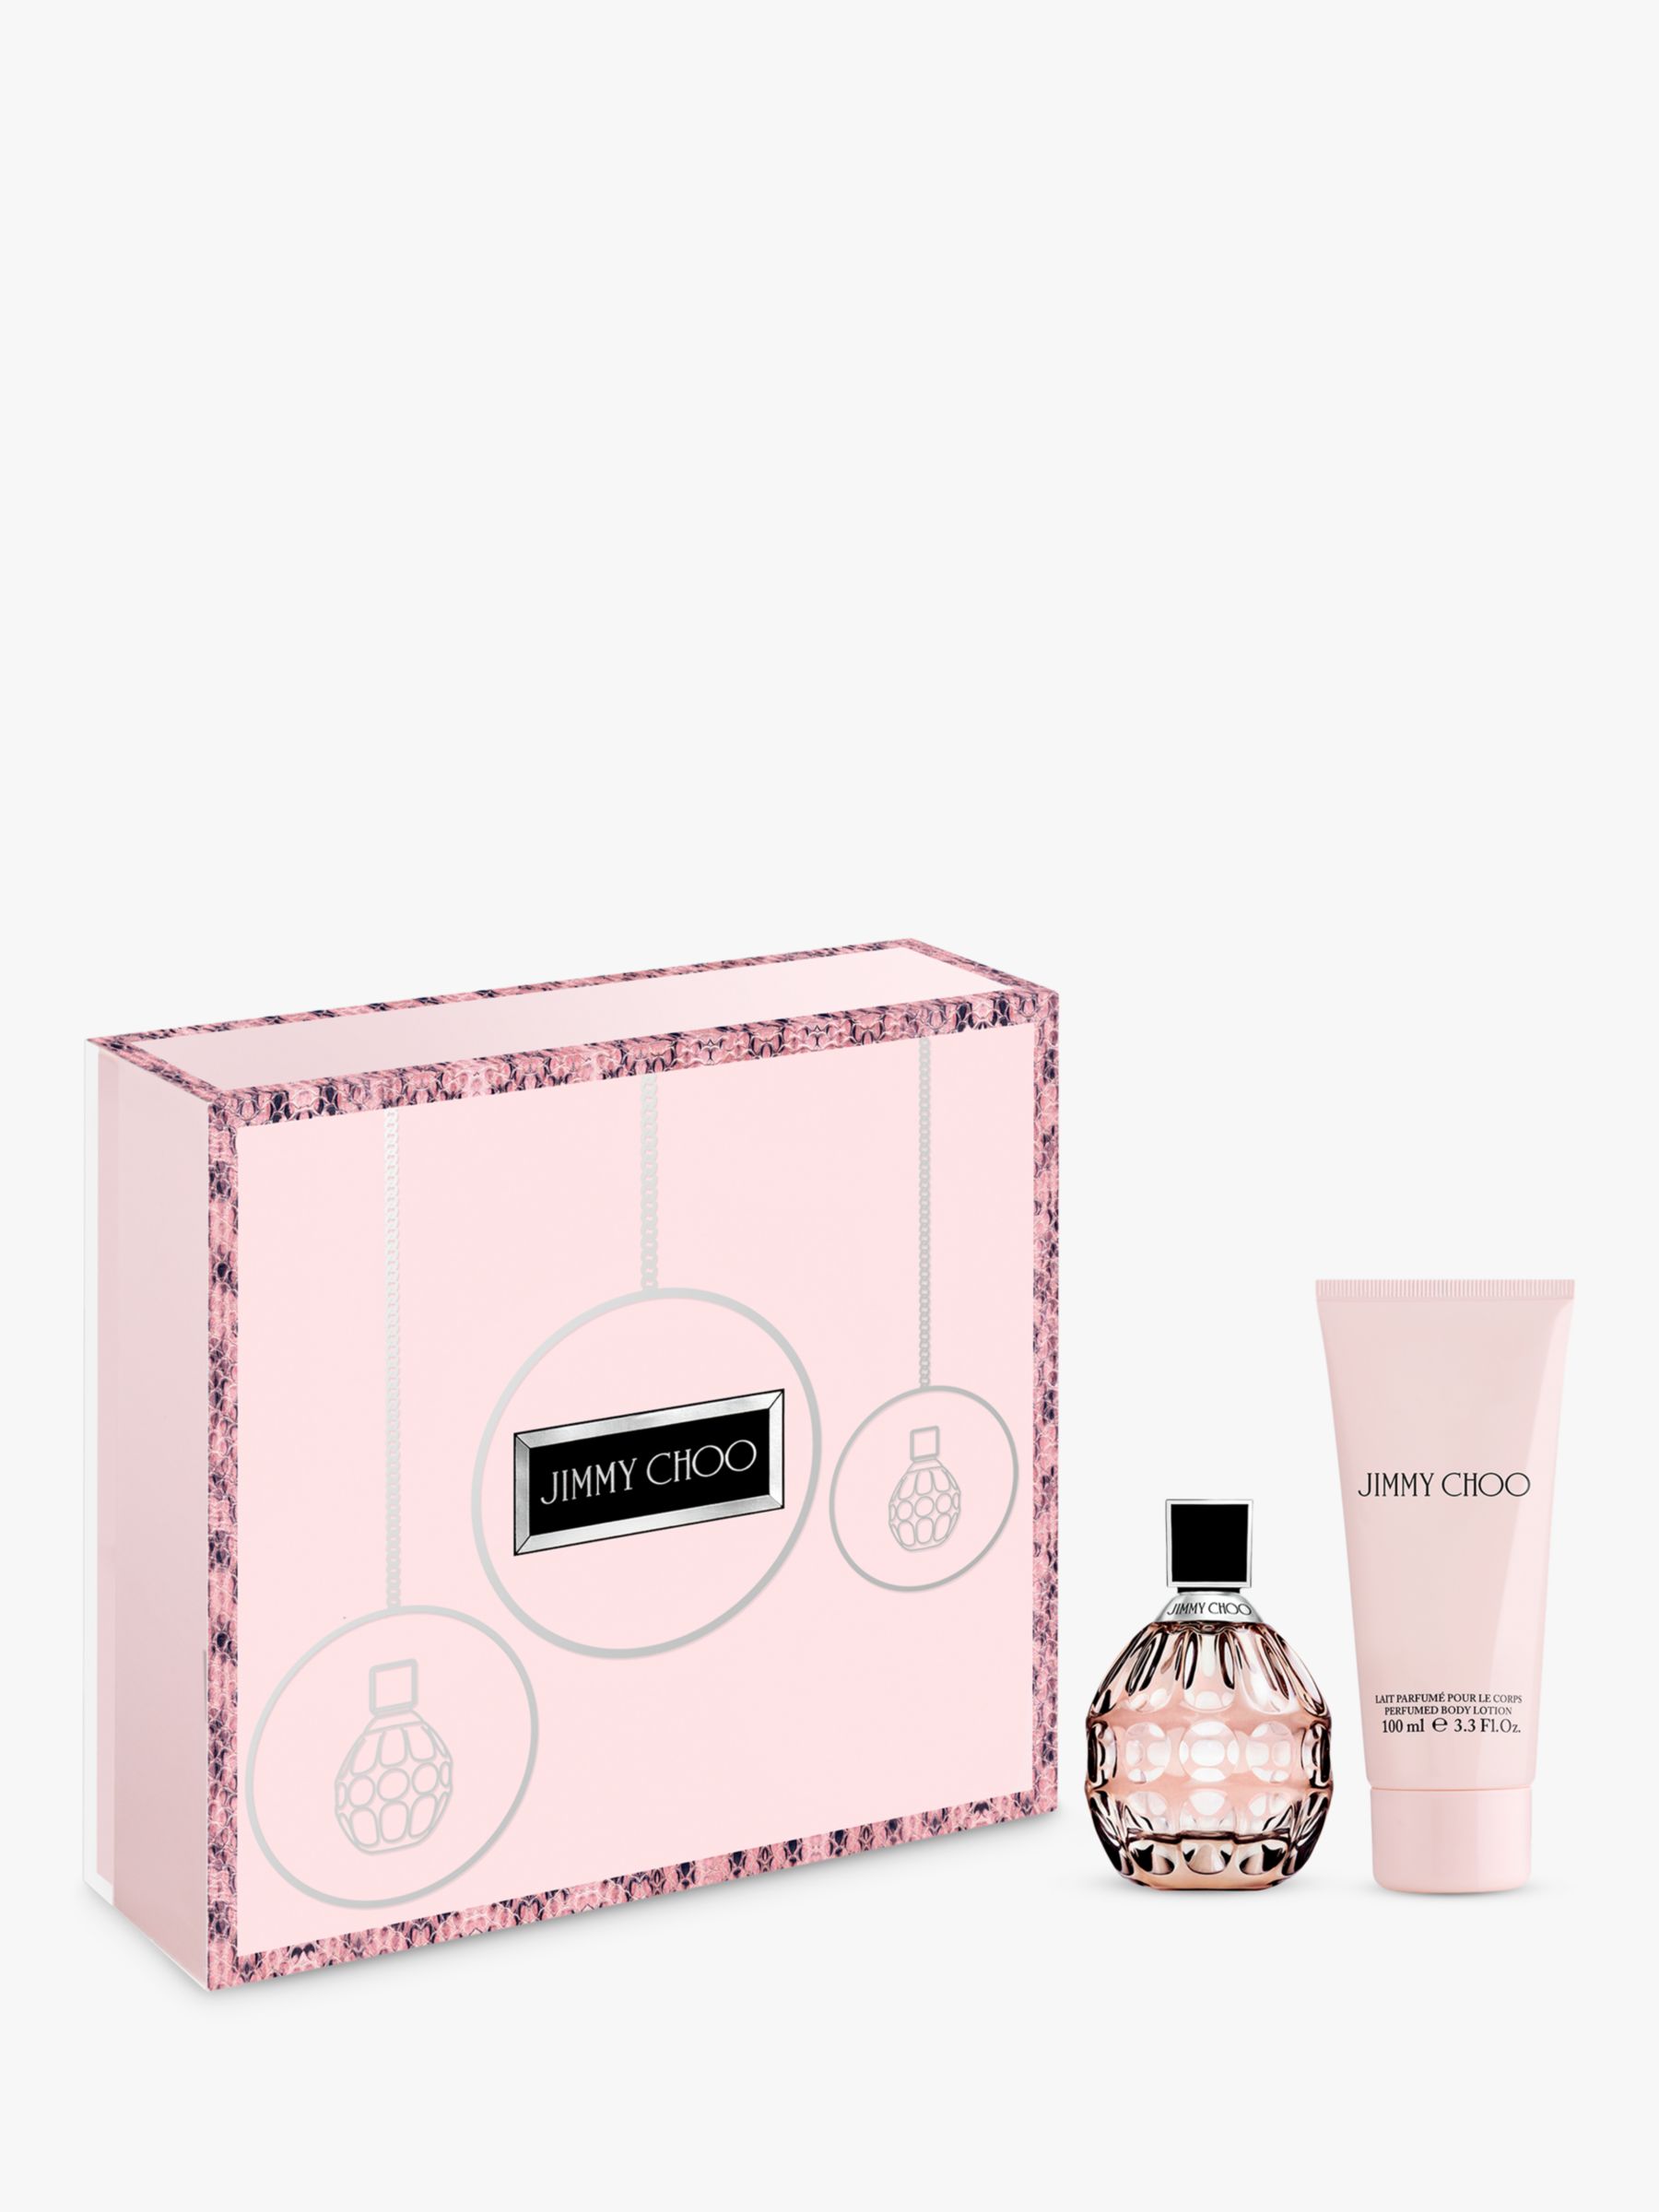 Jimmy Choo Eau de Parfum 60ml Fragrance Gift Set at John Lewis & Partners